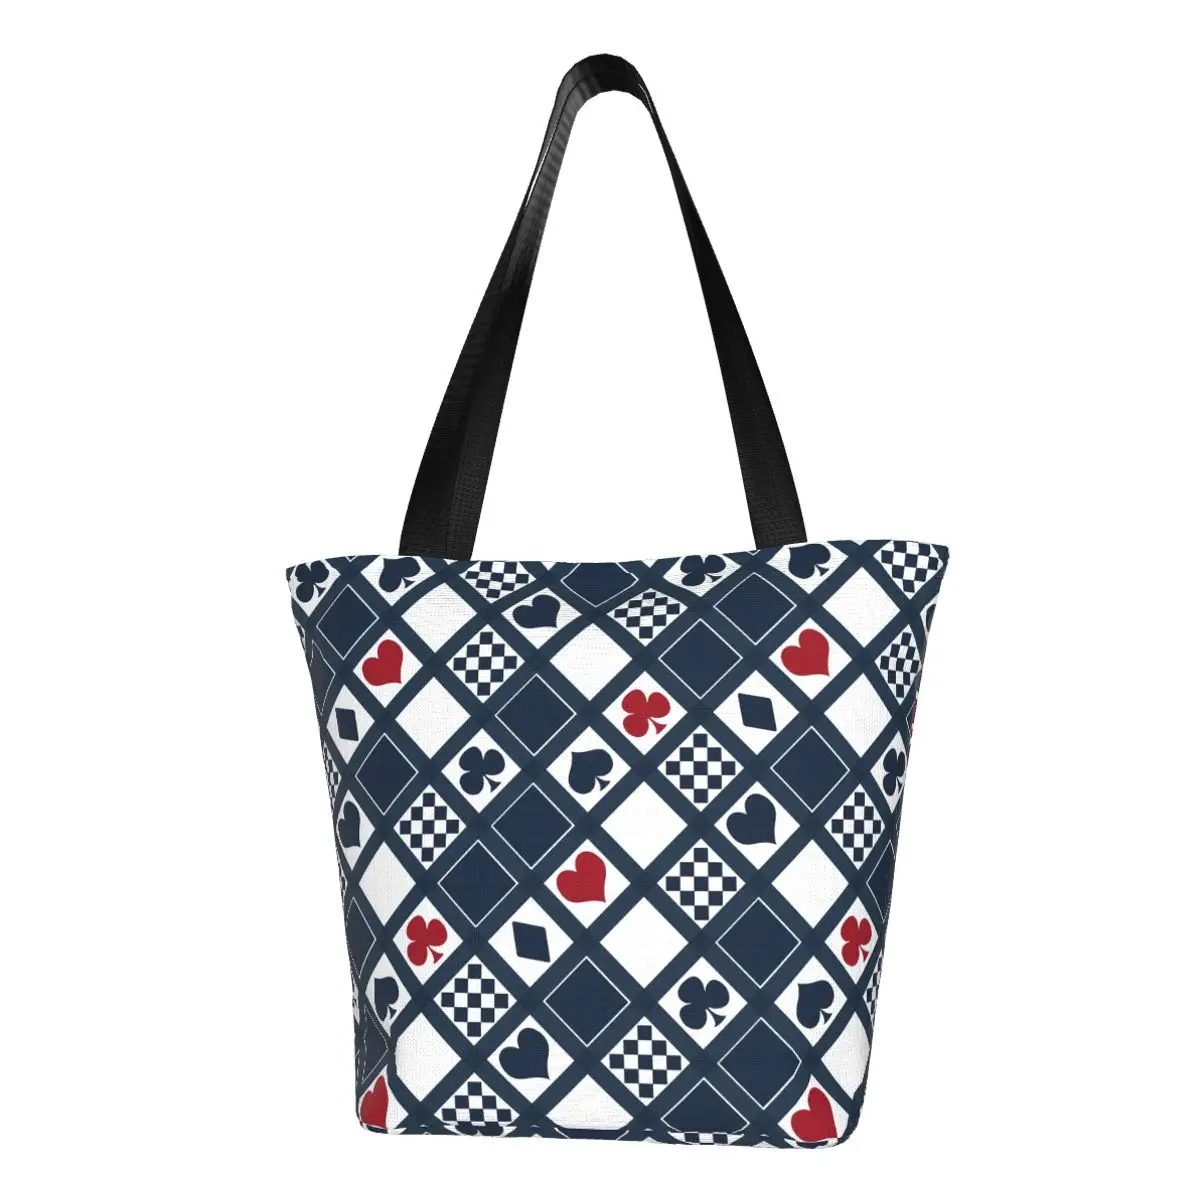 

Playing Cards Shopper Bag Hearts Crosses Clubs Graphic Shopping Bags Women Kawaii Tote Bag Cloth Office Female Handbags